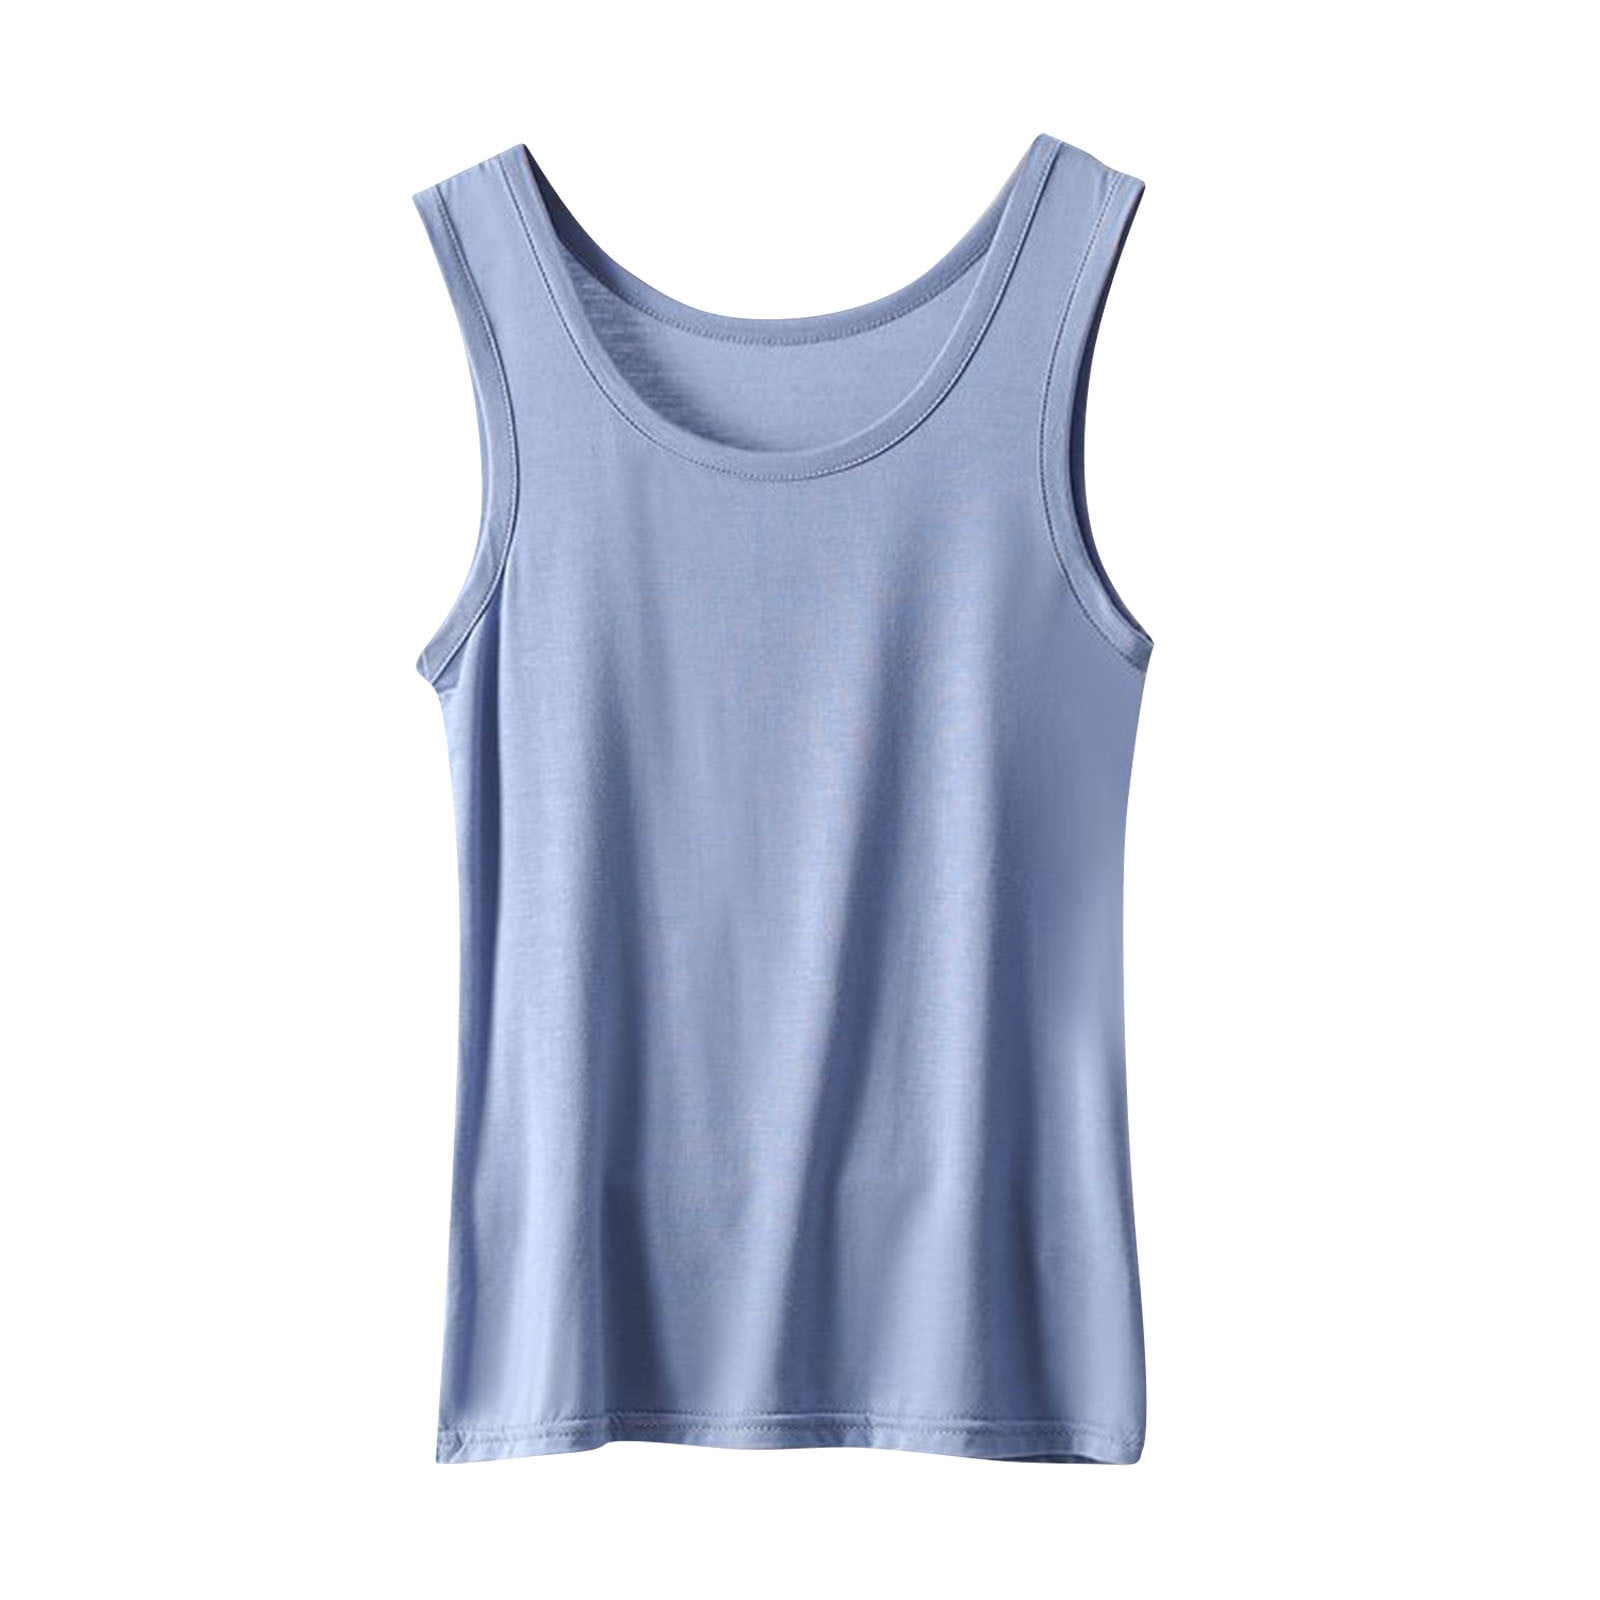 AherBiu Tank Tops for Women Cami Top Tees Shirt Sleeveless Basic Solid ...